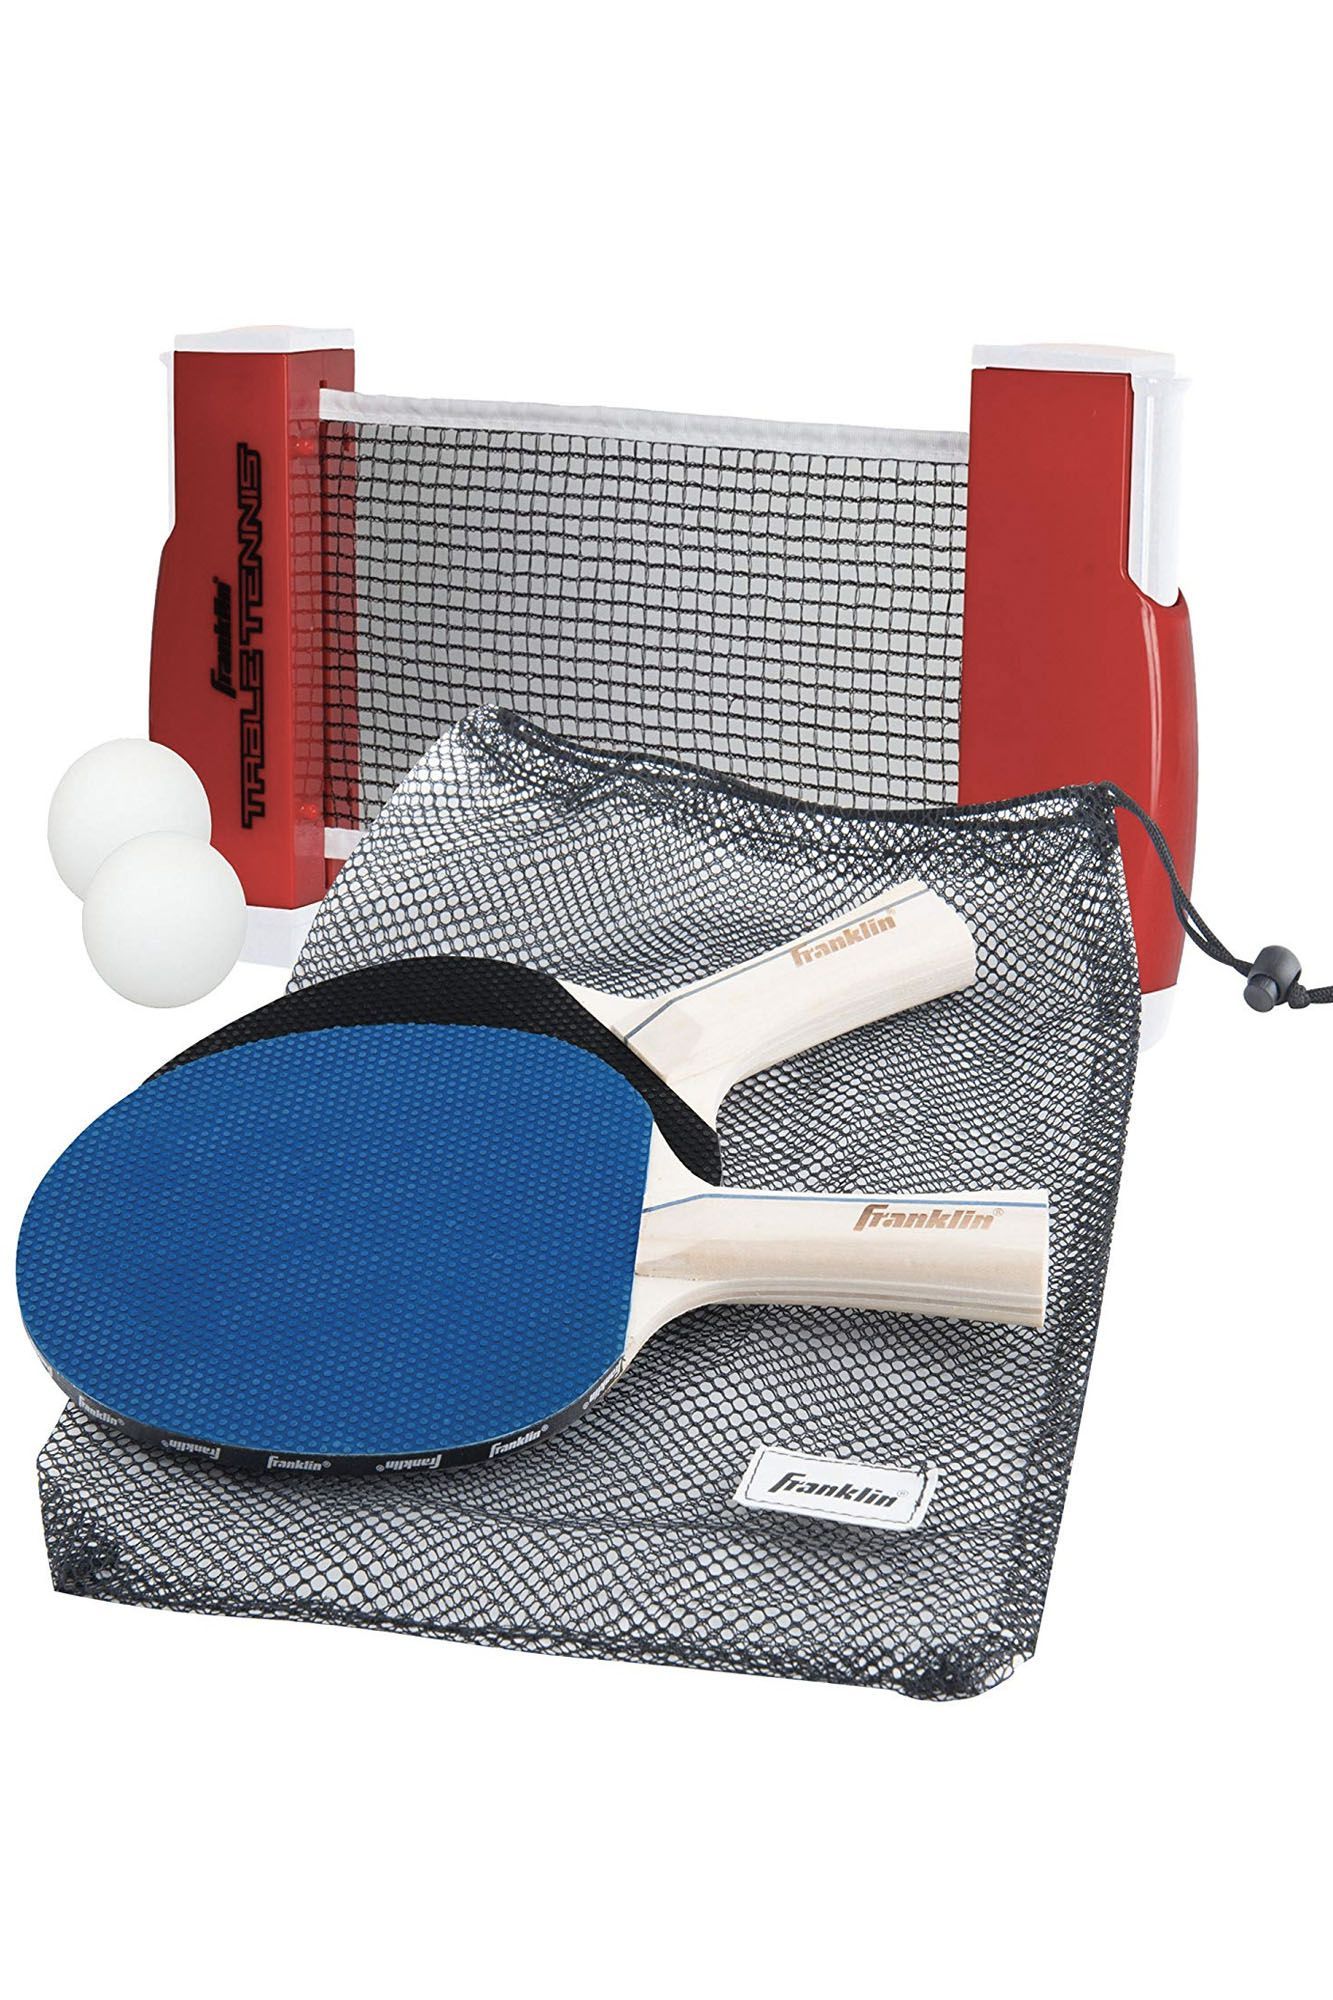 Ракетка для маленького тенниса. ARTENGO 700 ракетка для настольного тенниса. Набор д/настольного тенниса (ракетка 2шт,шар 3шт). Набор для настольный теннис Ping - Pong. Ракетка настольного тенниса start Level 200.